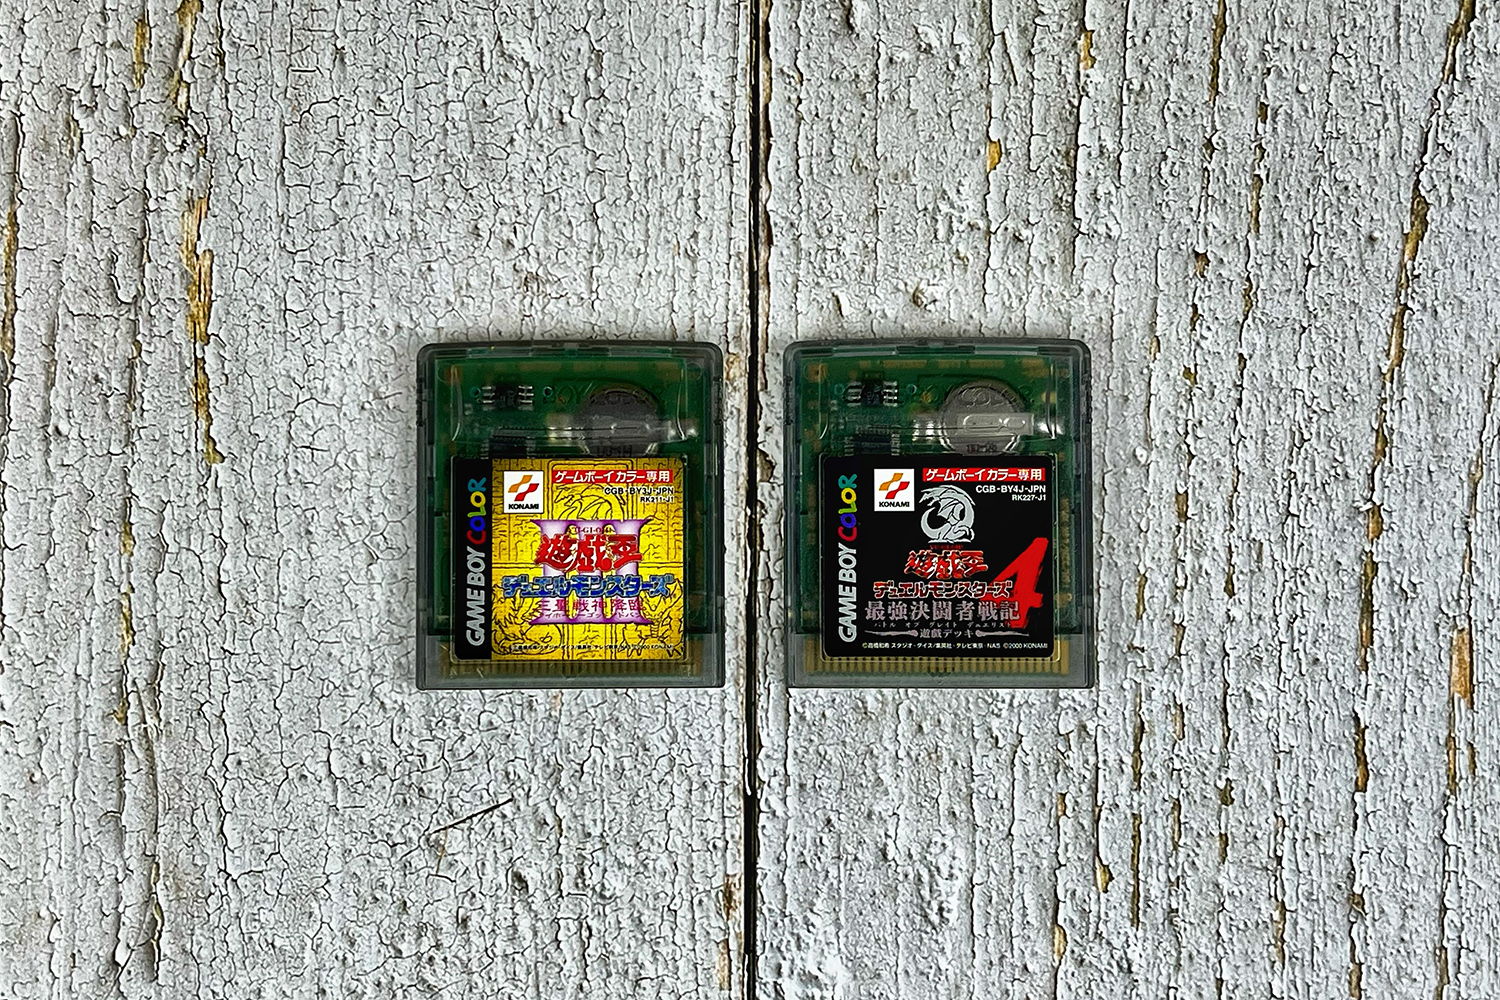 Game Boy Color cartridge